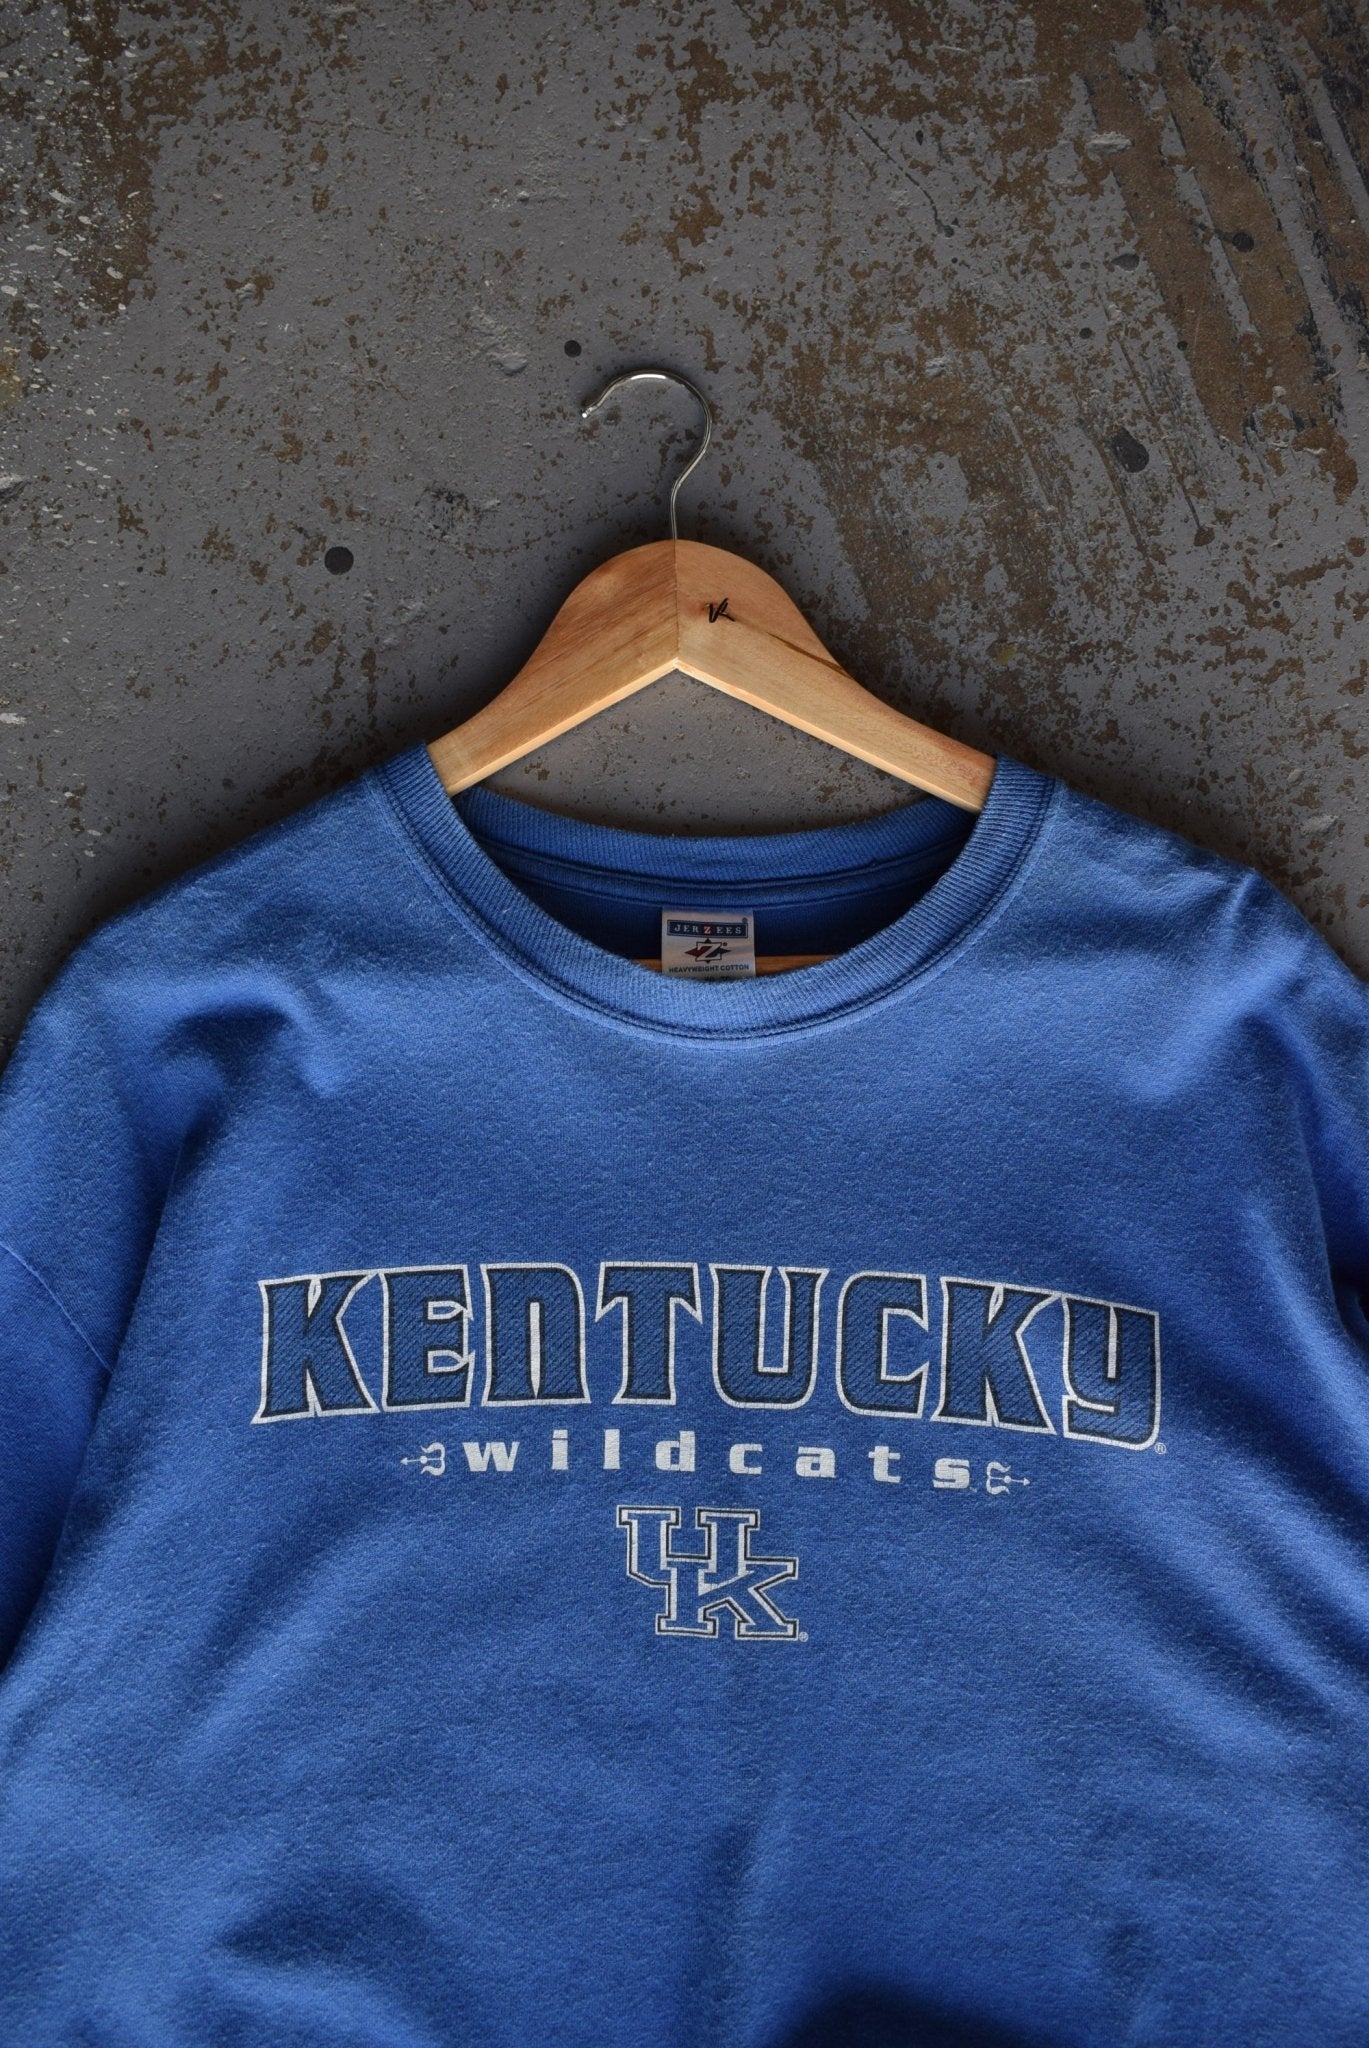 Vintage University of Kentucky Wildcats Tee (L/XL) - Retrospective Store